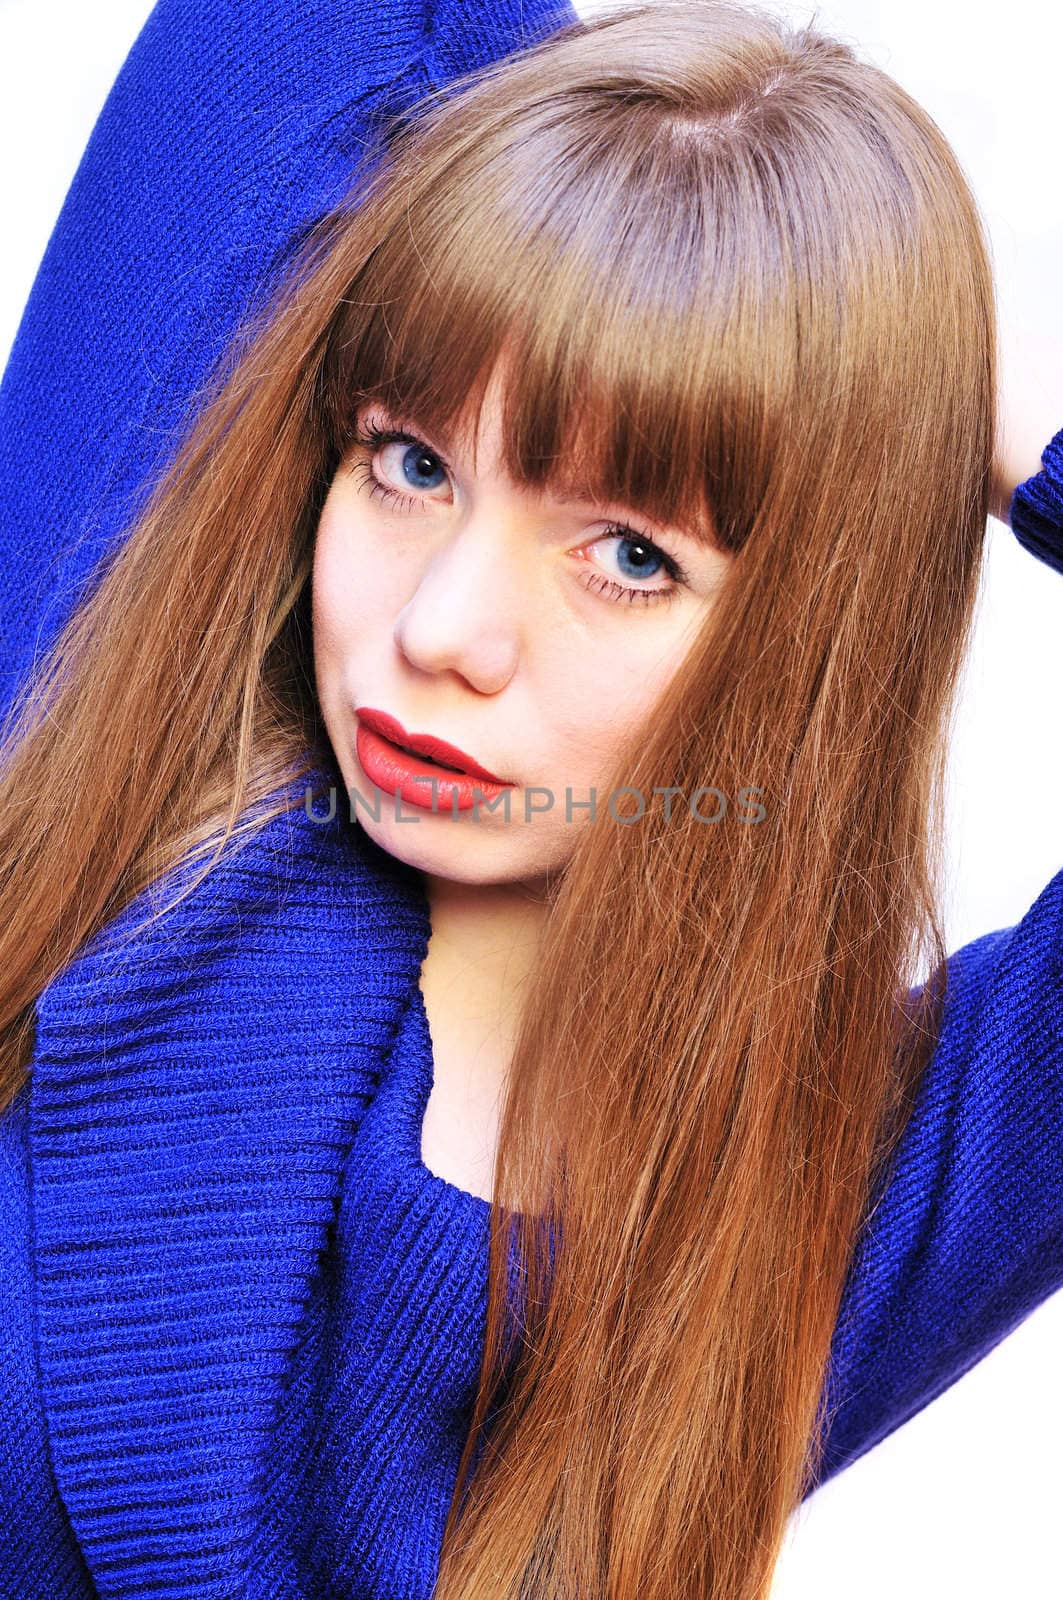 blue-eyed lovely girl wearing blue sweater